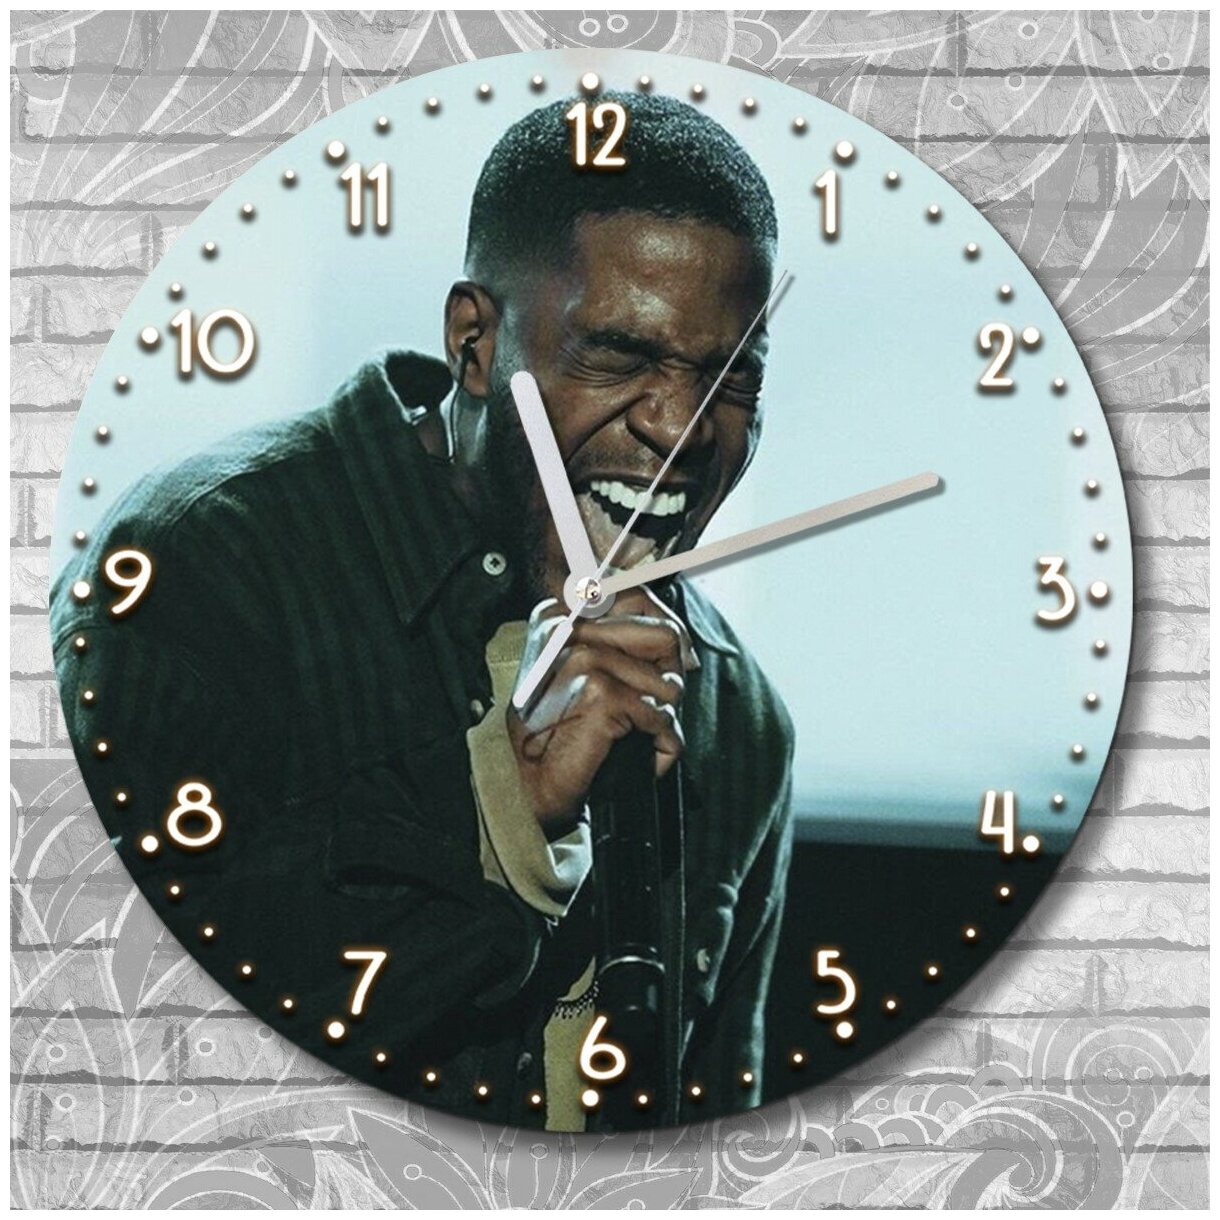 Настенные часы УФ музыка (music, rap, hip hop, sound, руки вверх, hands up, style, graffiti, life) - 2094